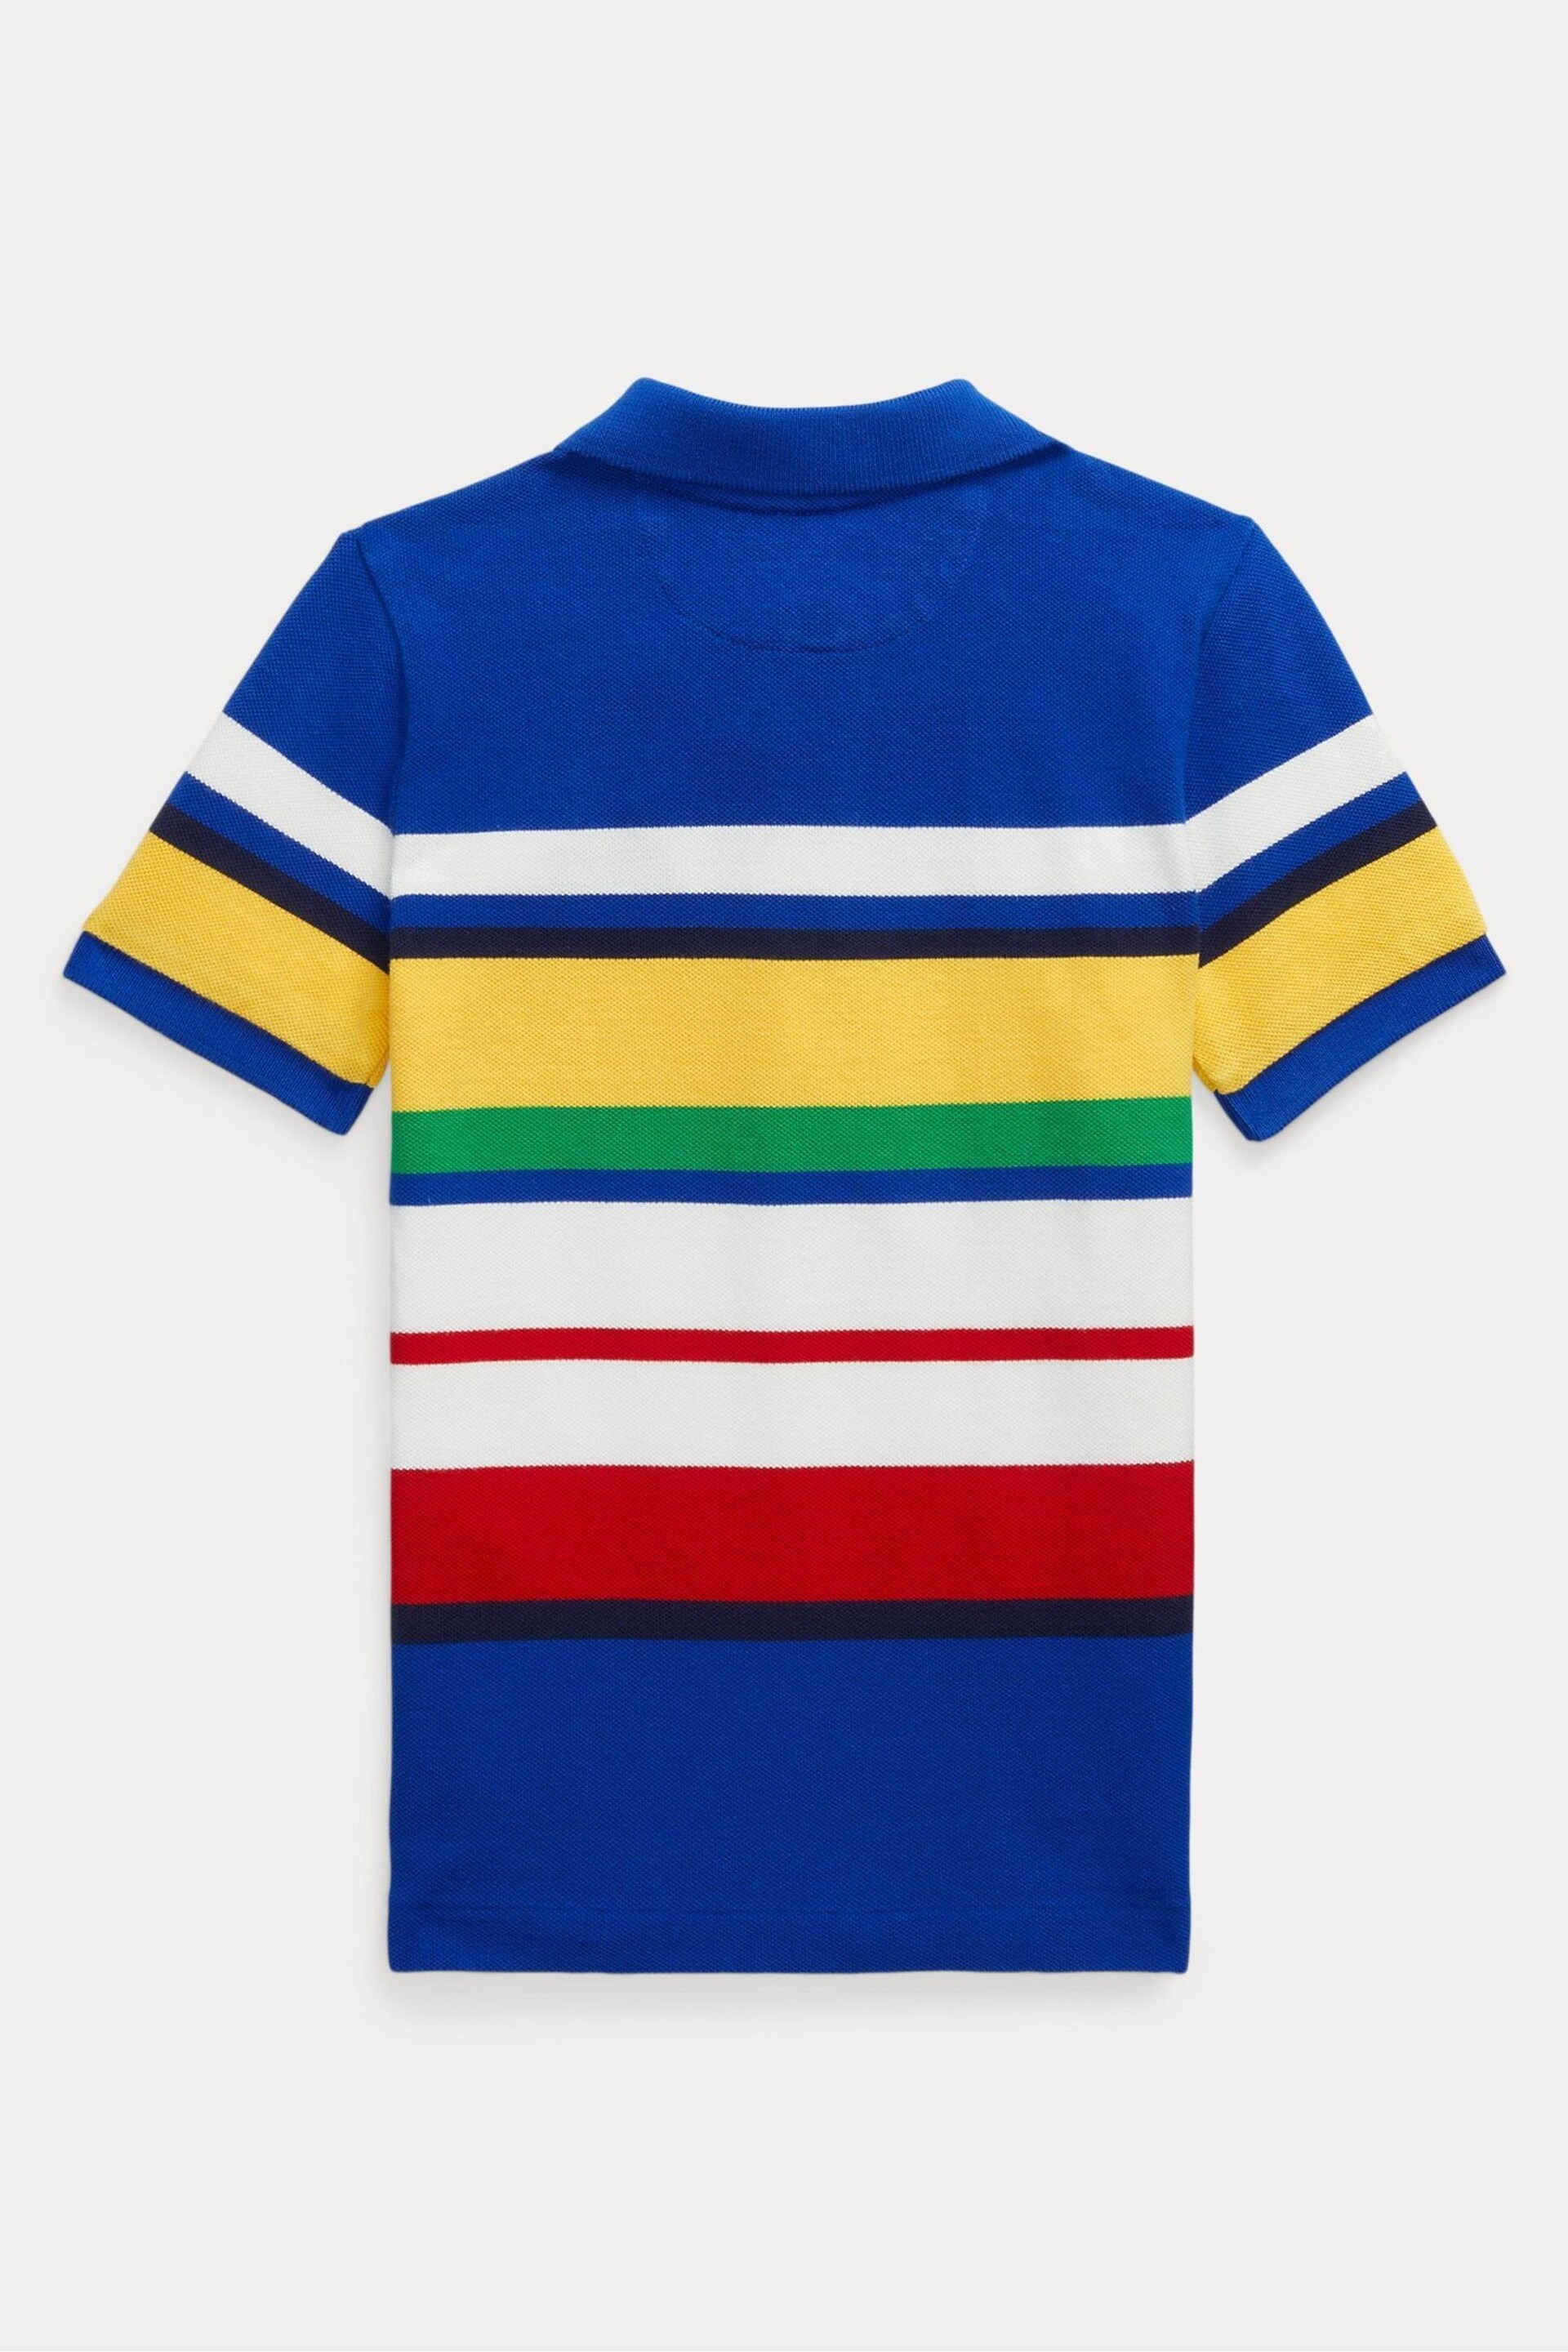 Polo Ralph Lauren Blue Striped Cotton Mesh Polo Shirt - Image 2 of 2